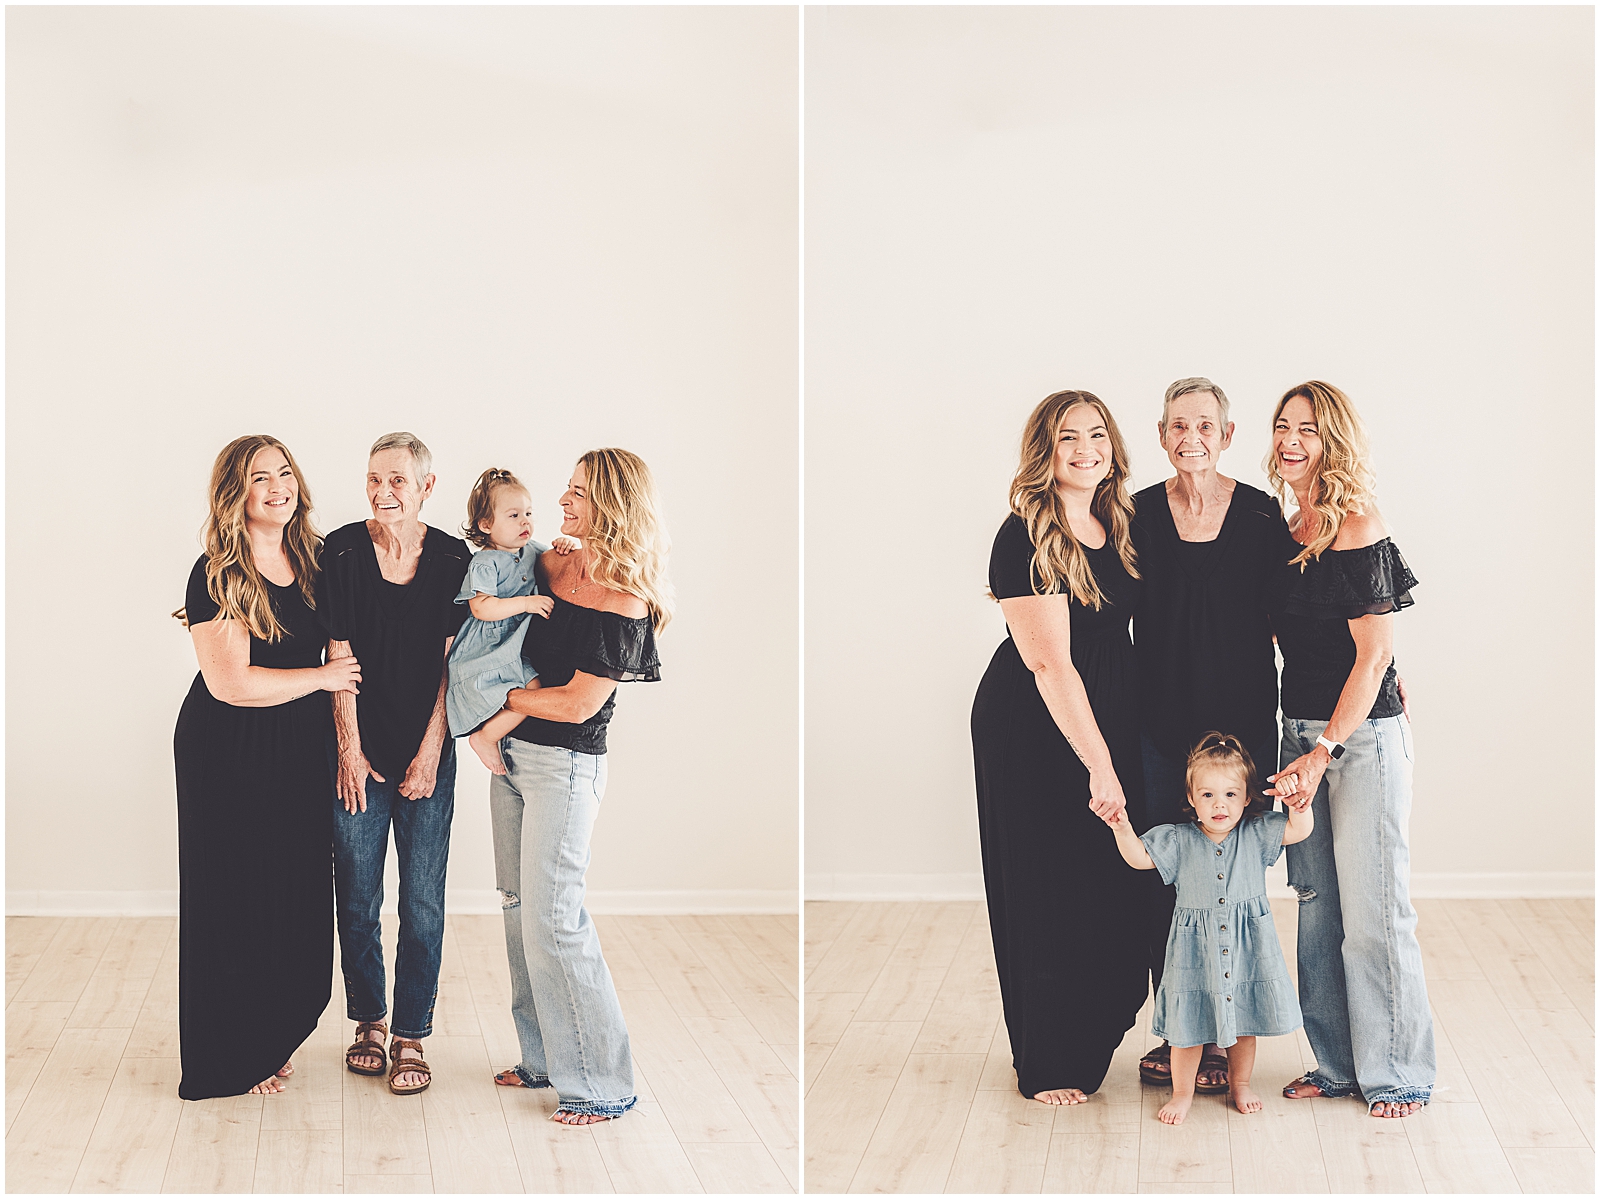 Studio four-generation photo session for the Stalf, Grogan, & Fryman family with Kankakee family photographer Kara Evans Photographer.